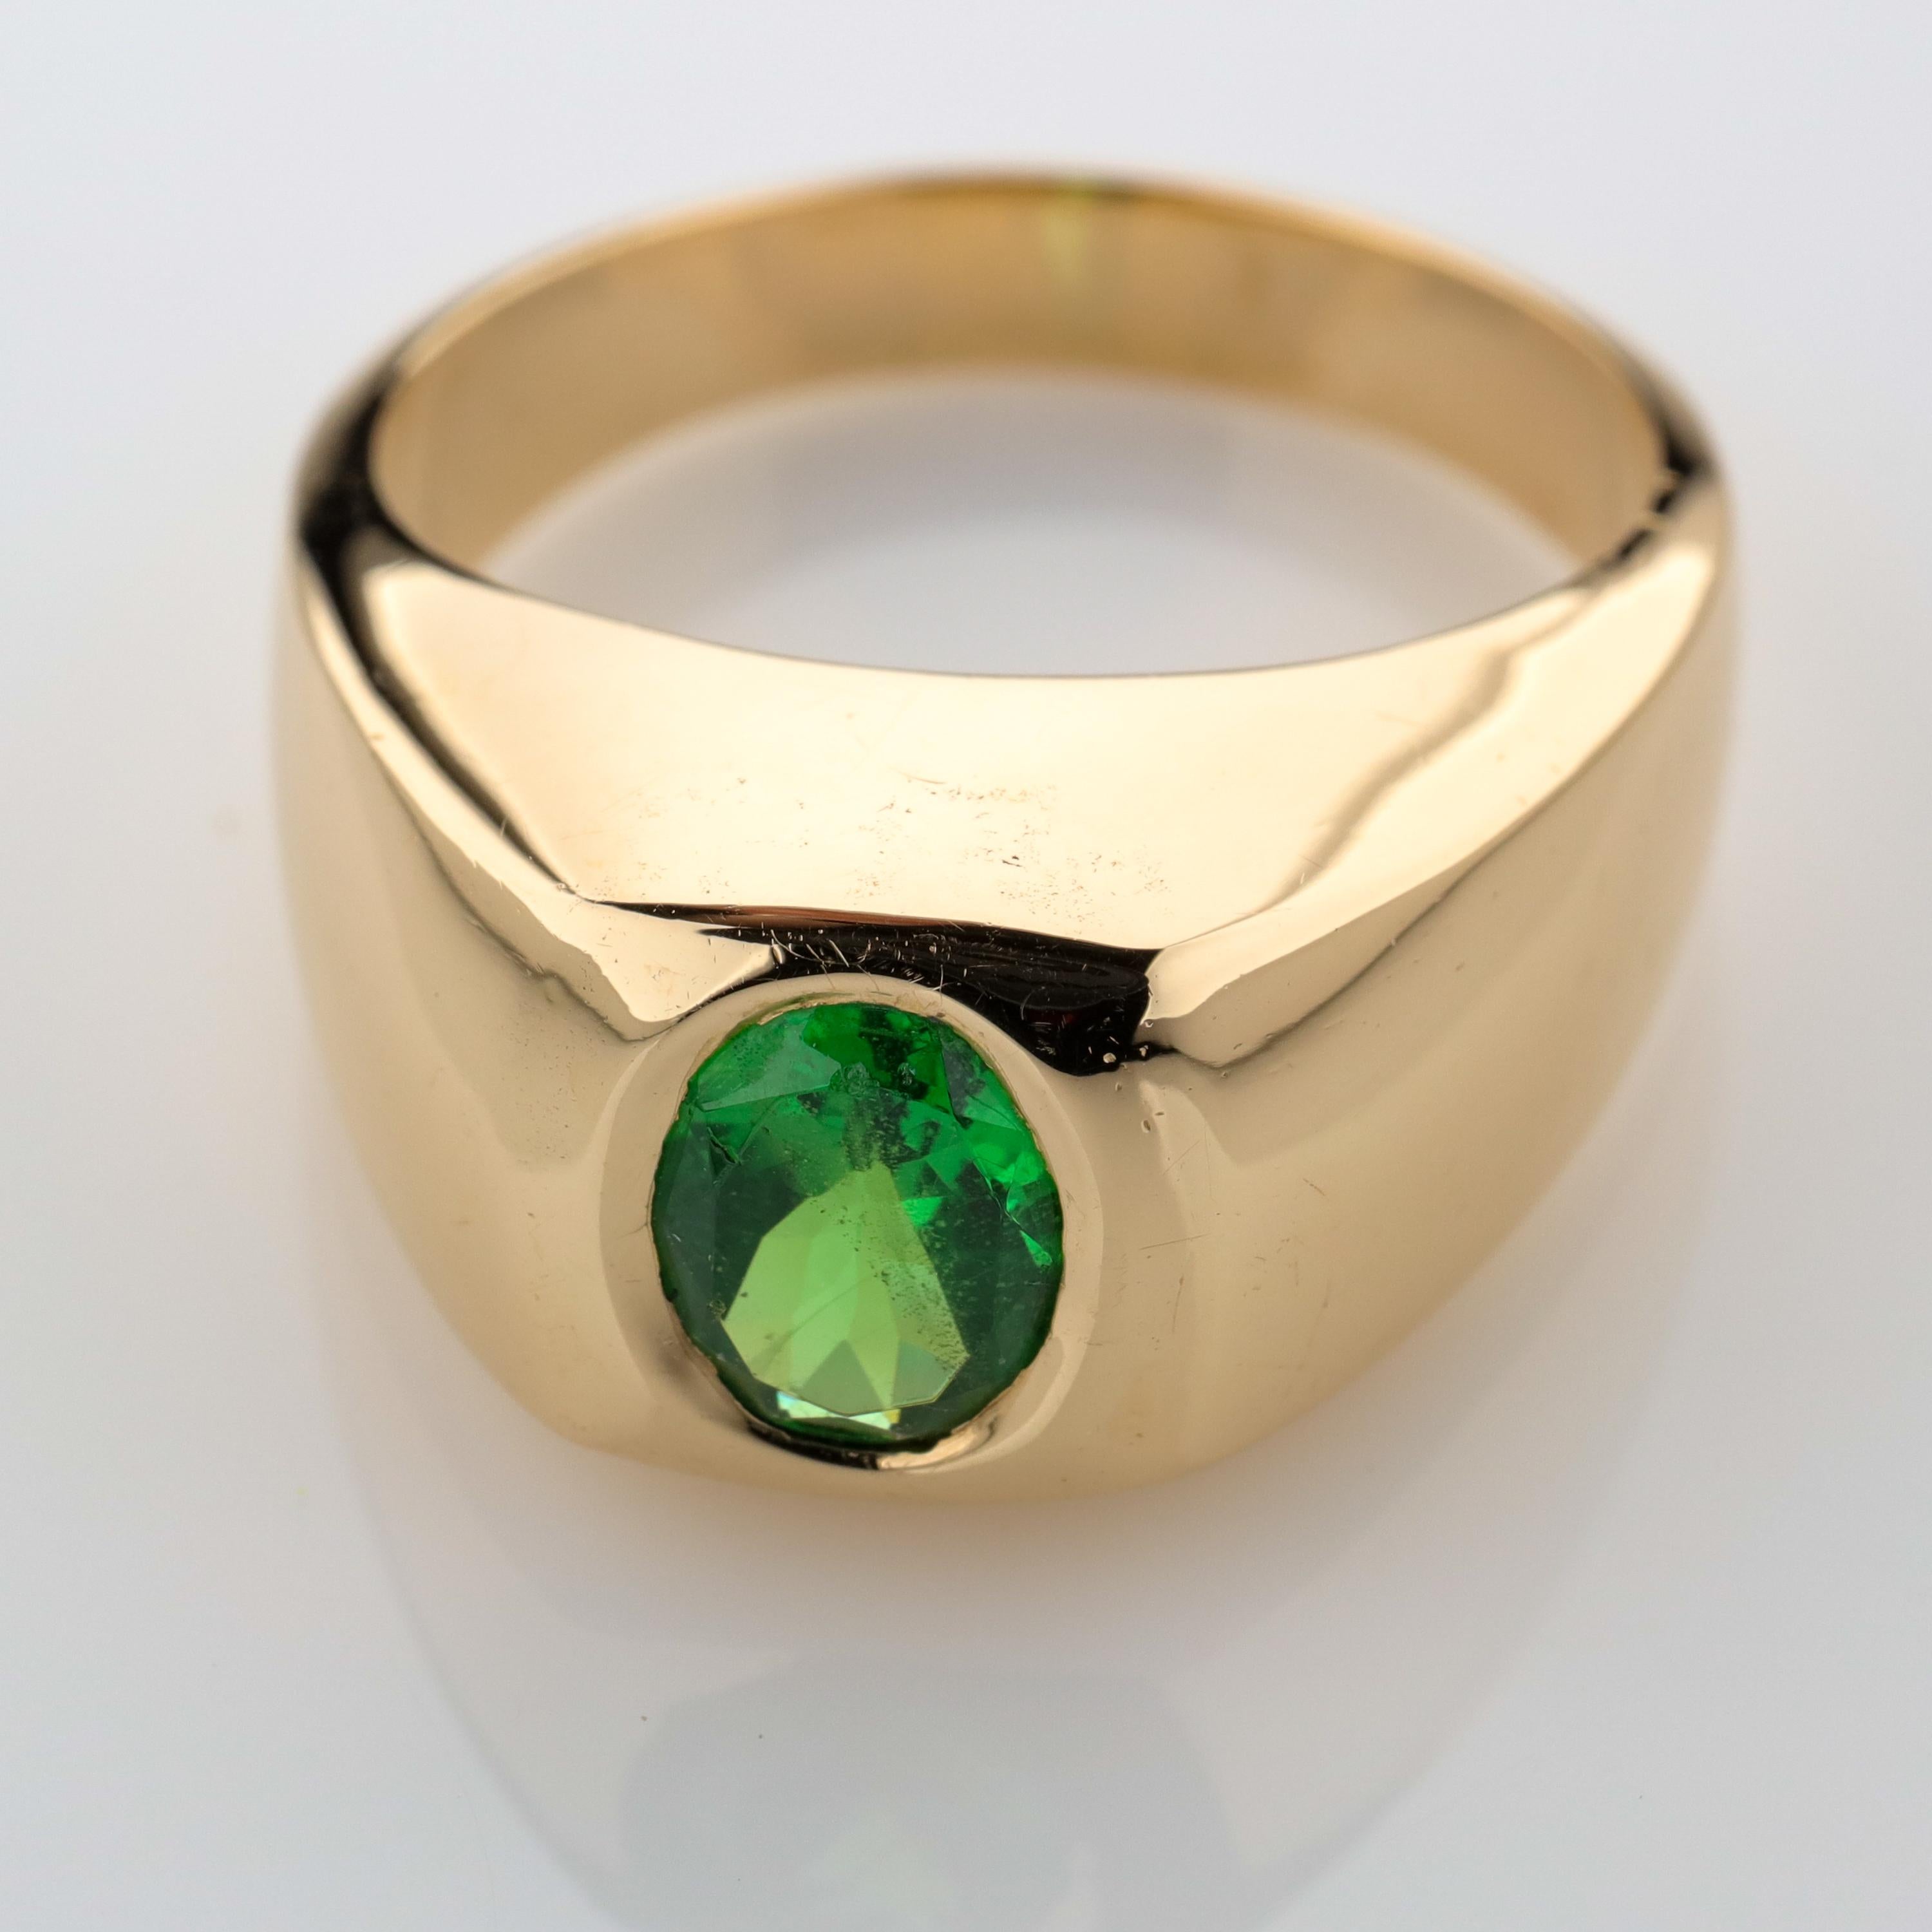 Contemporary Men's Gold Ring with Tsavorite Garnet